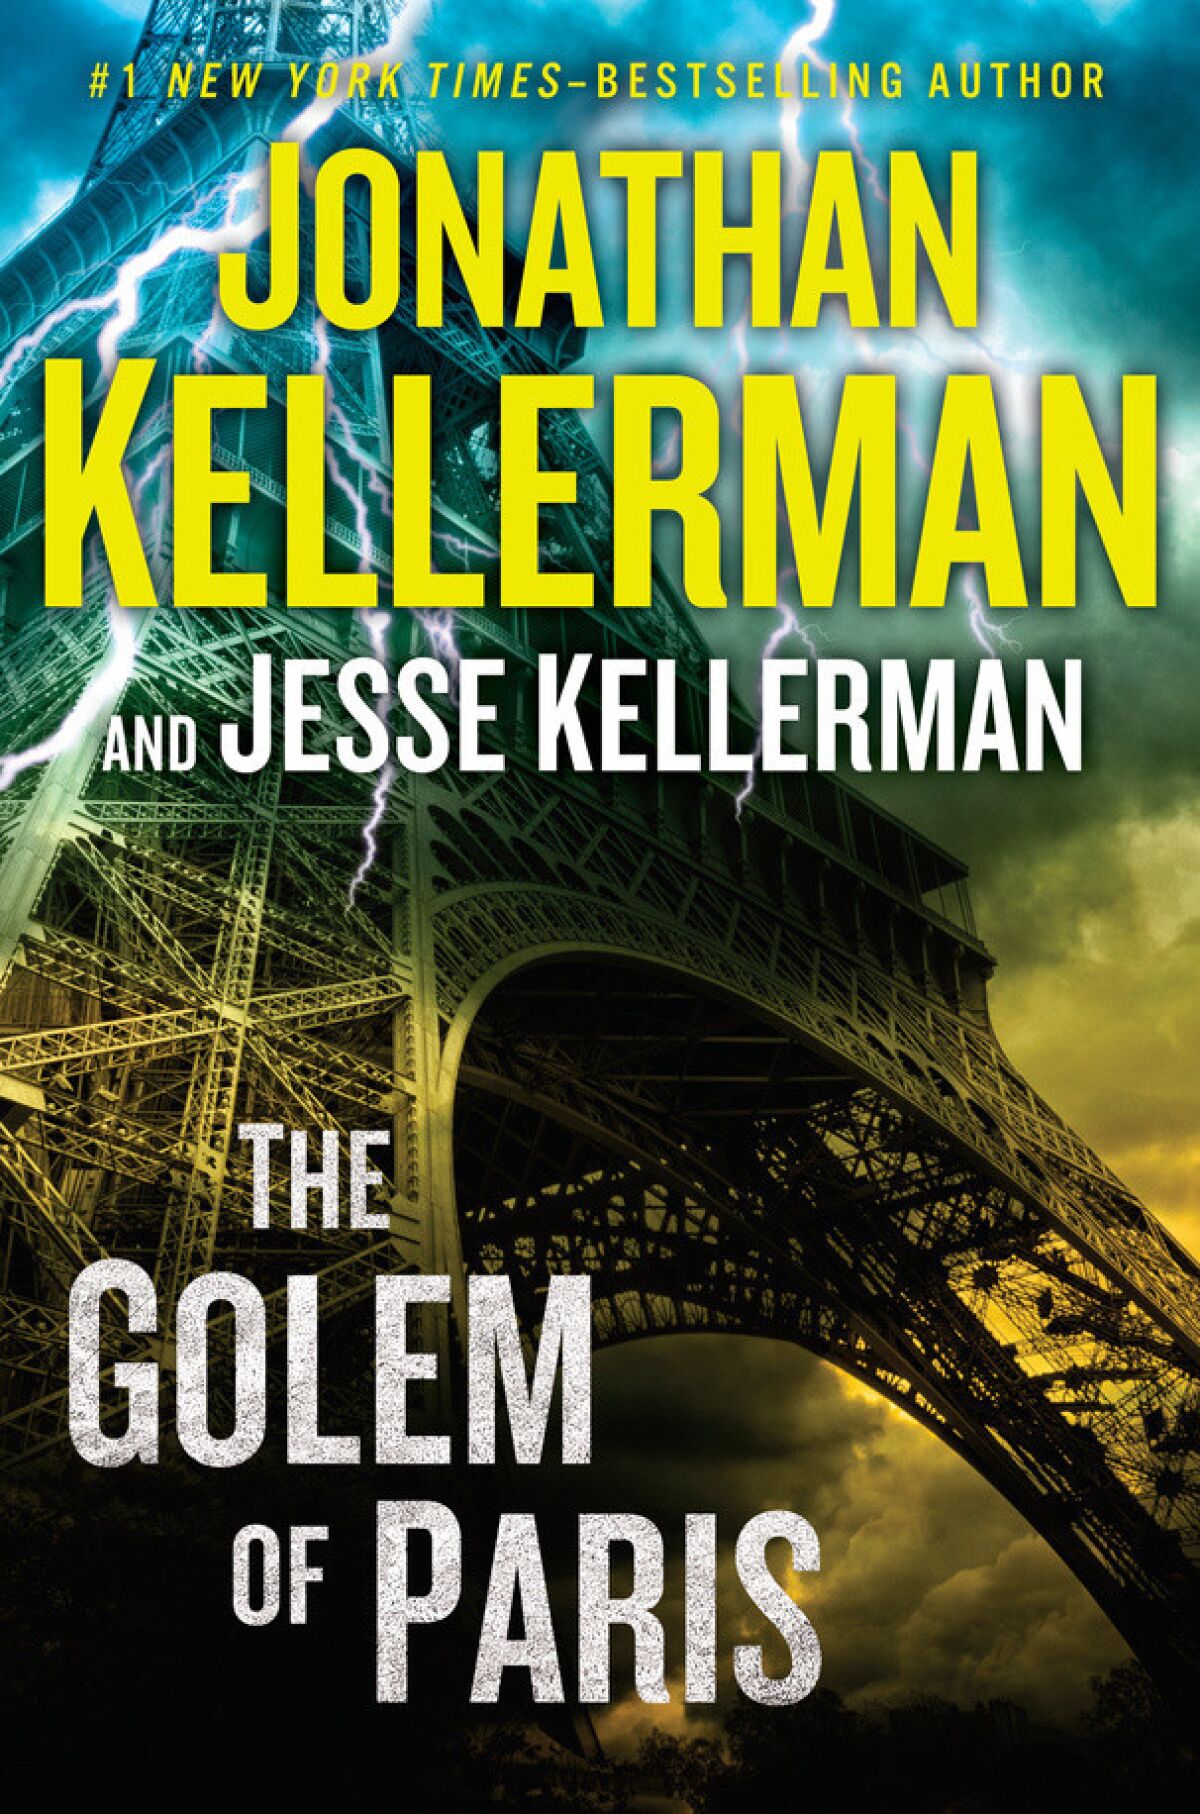 "The Golem of Paris" by Jonathan and Jesse Kellerman.